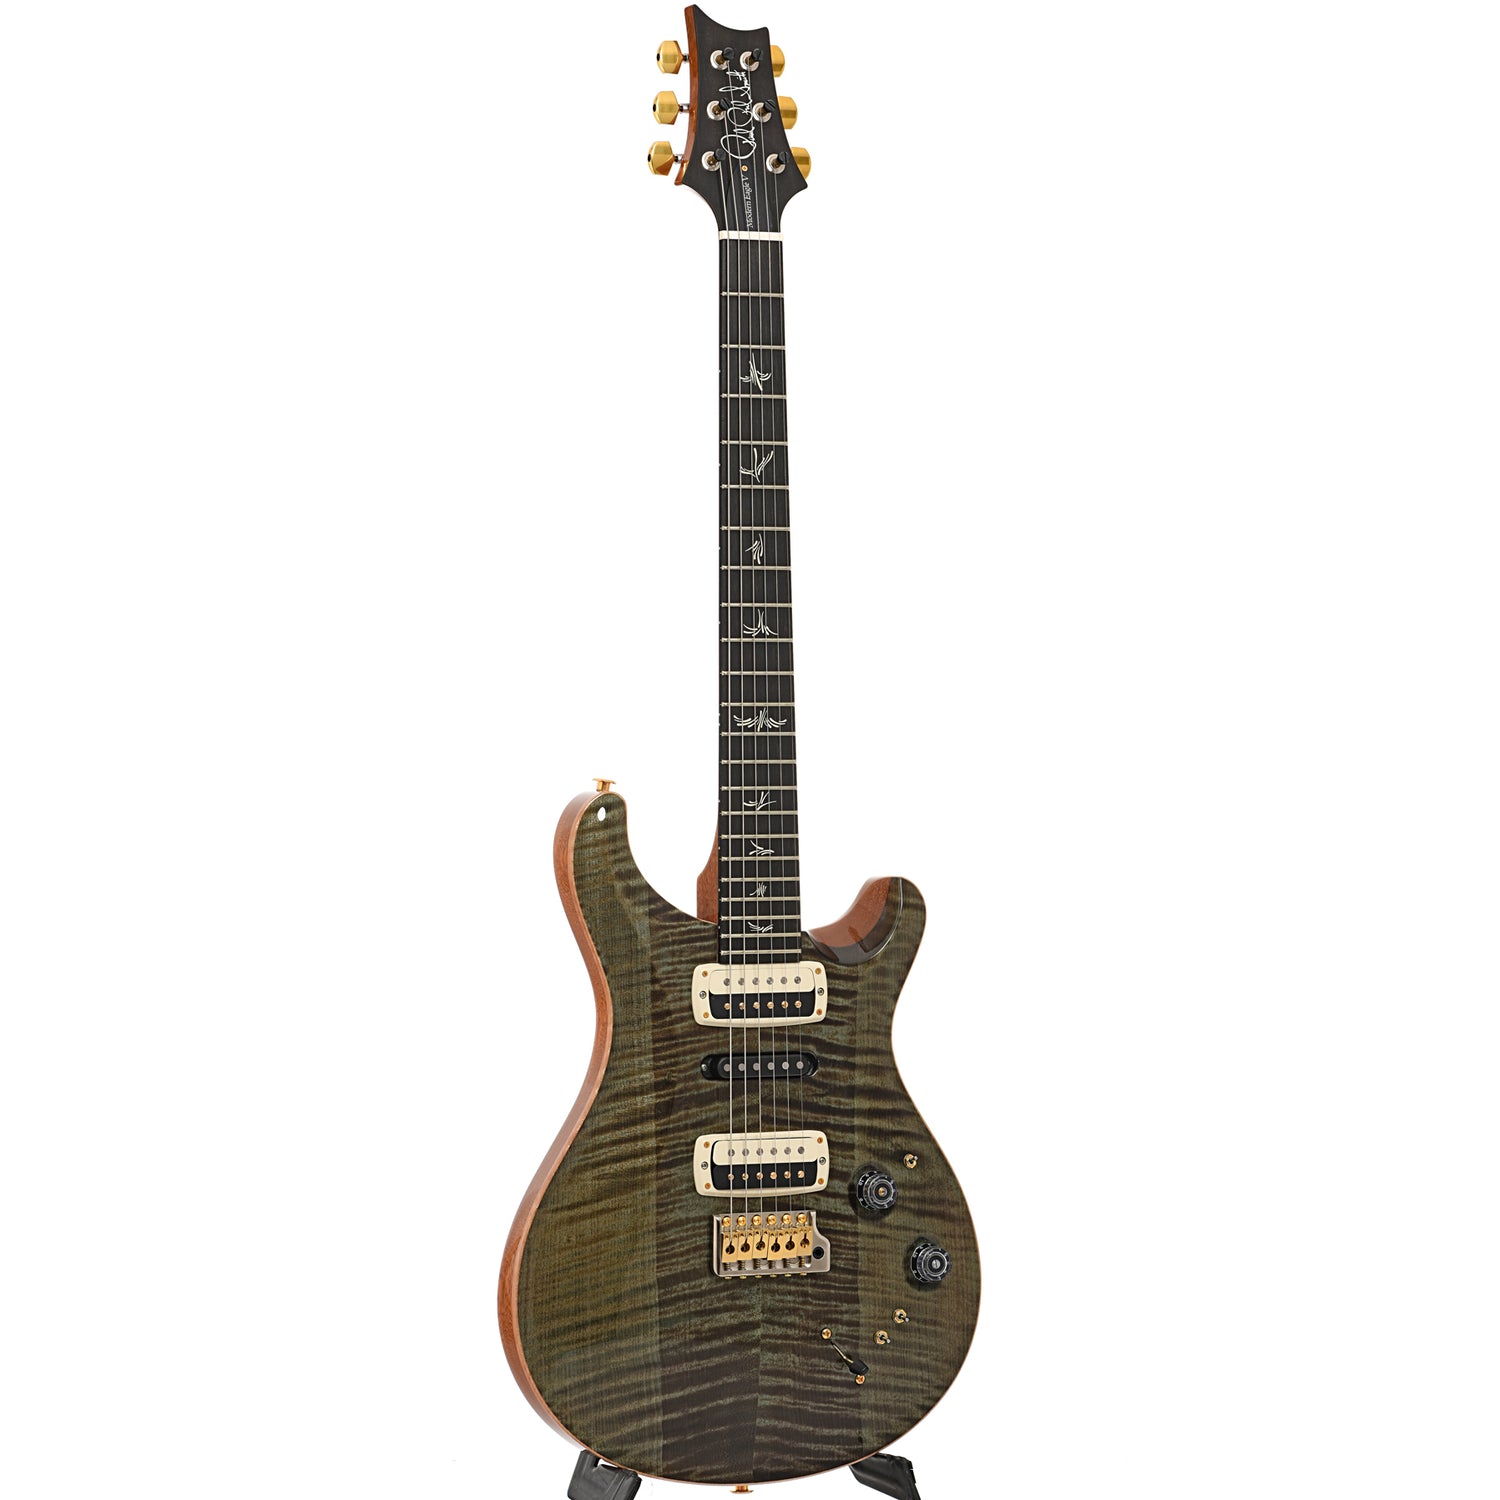 Full front and side of PRS Modern Eagle V guitar